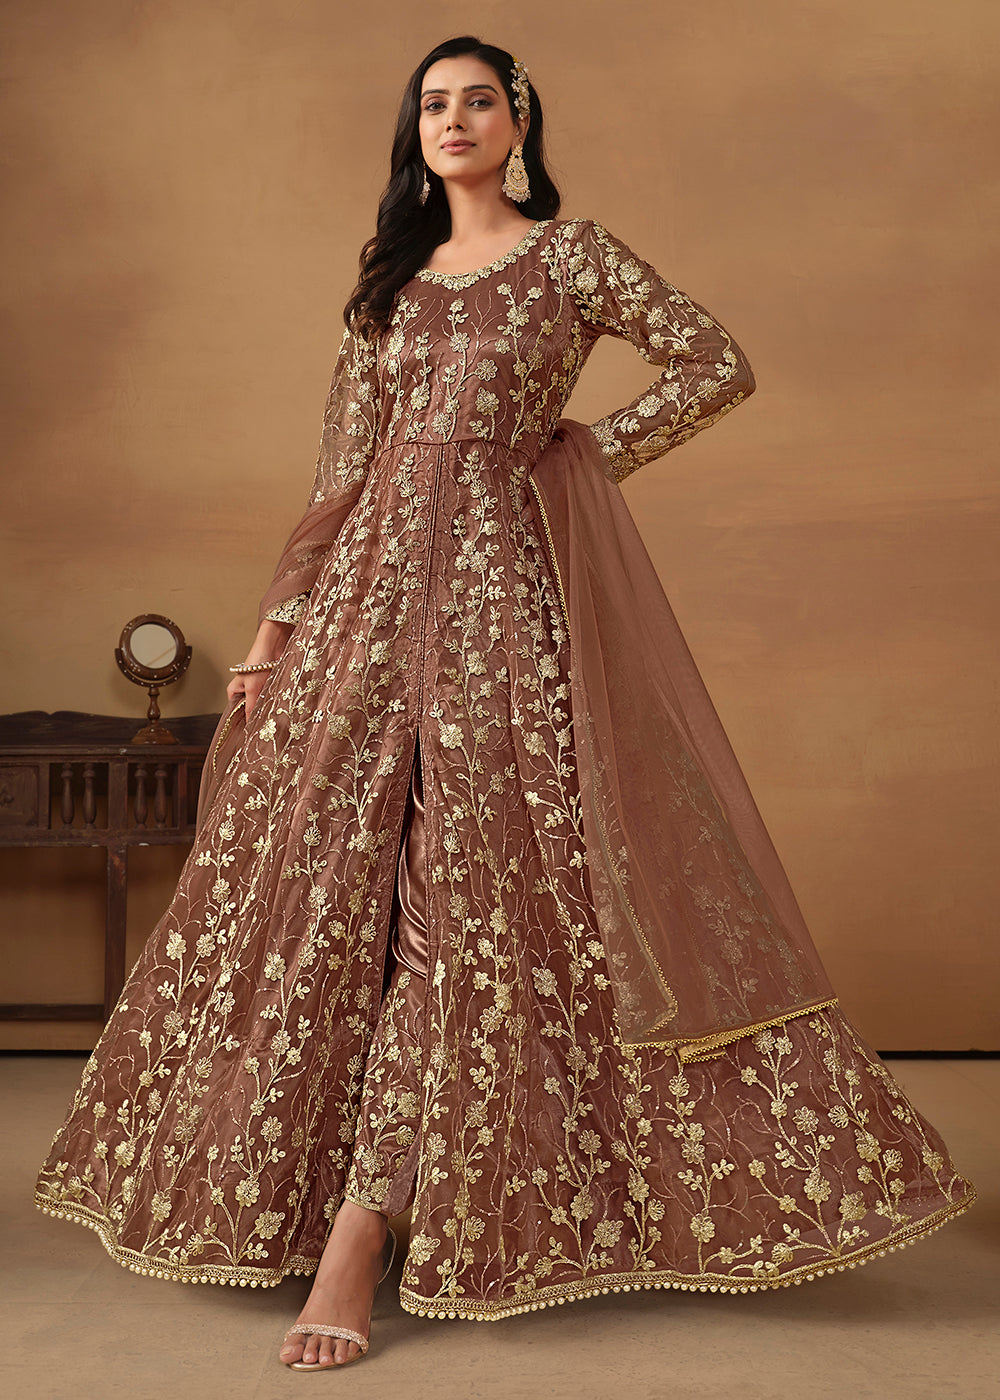 Wedding Lehenga Dress | Punjaban Designer Boutique